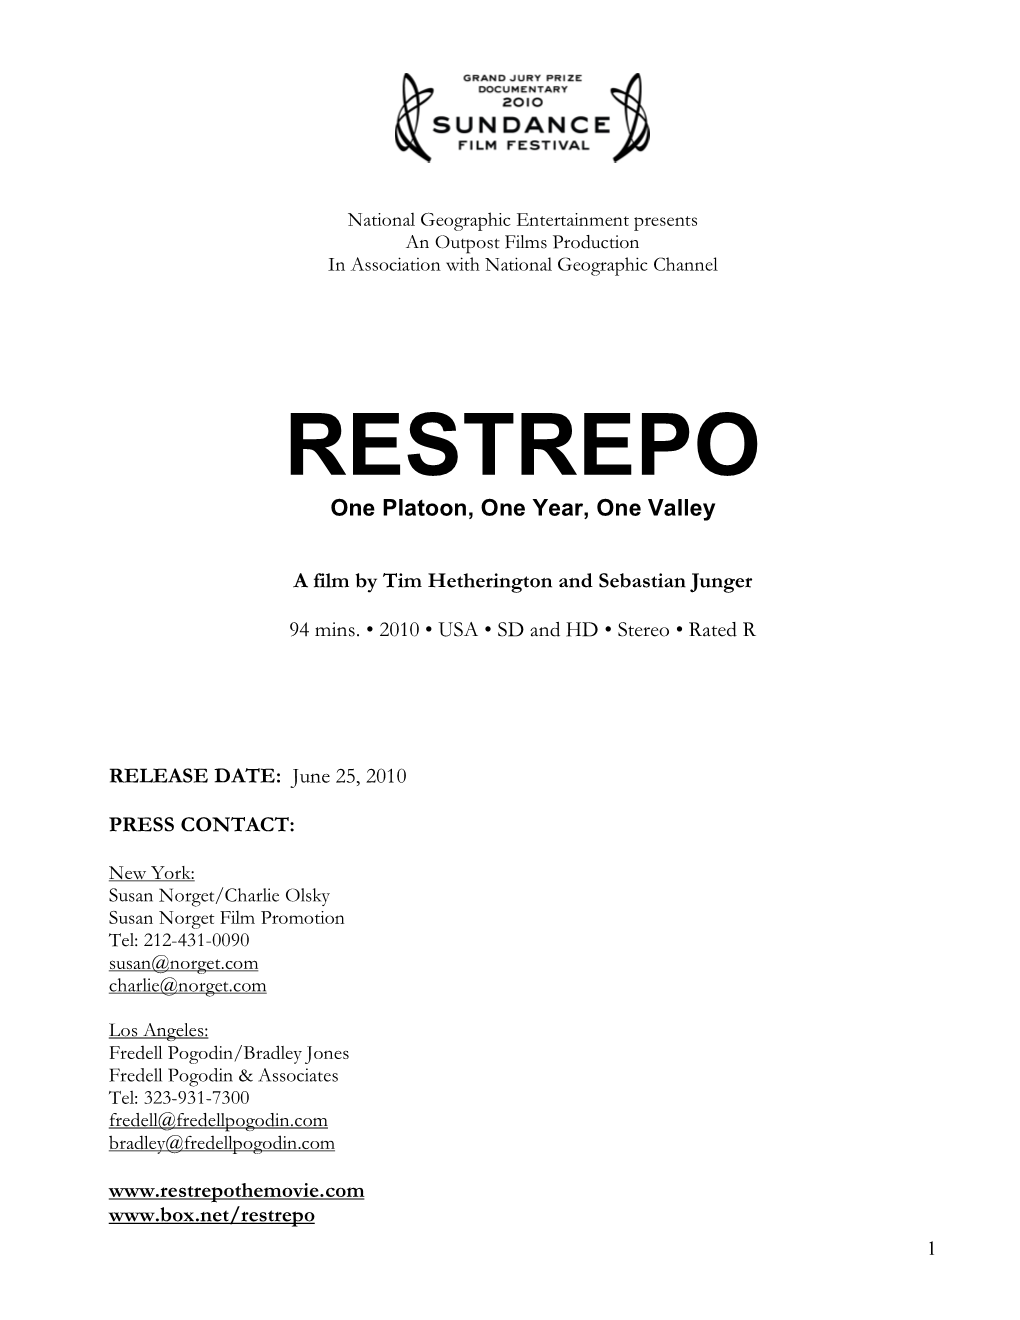 RESTREPO Press Notes6.14